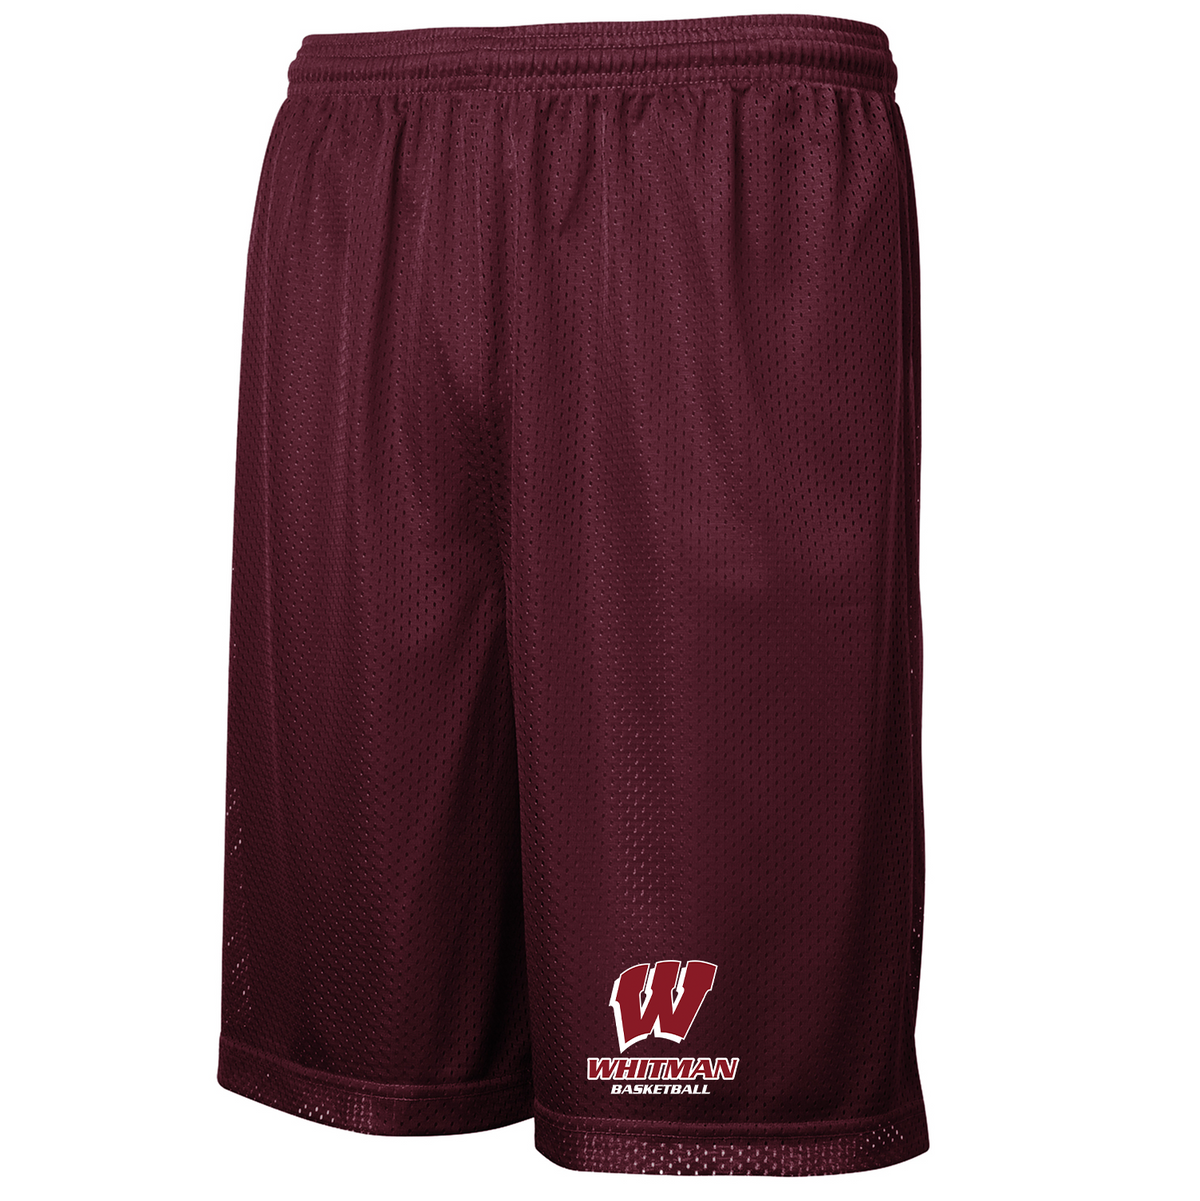 Whitman Basketball Classic Mesh Shorts